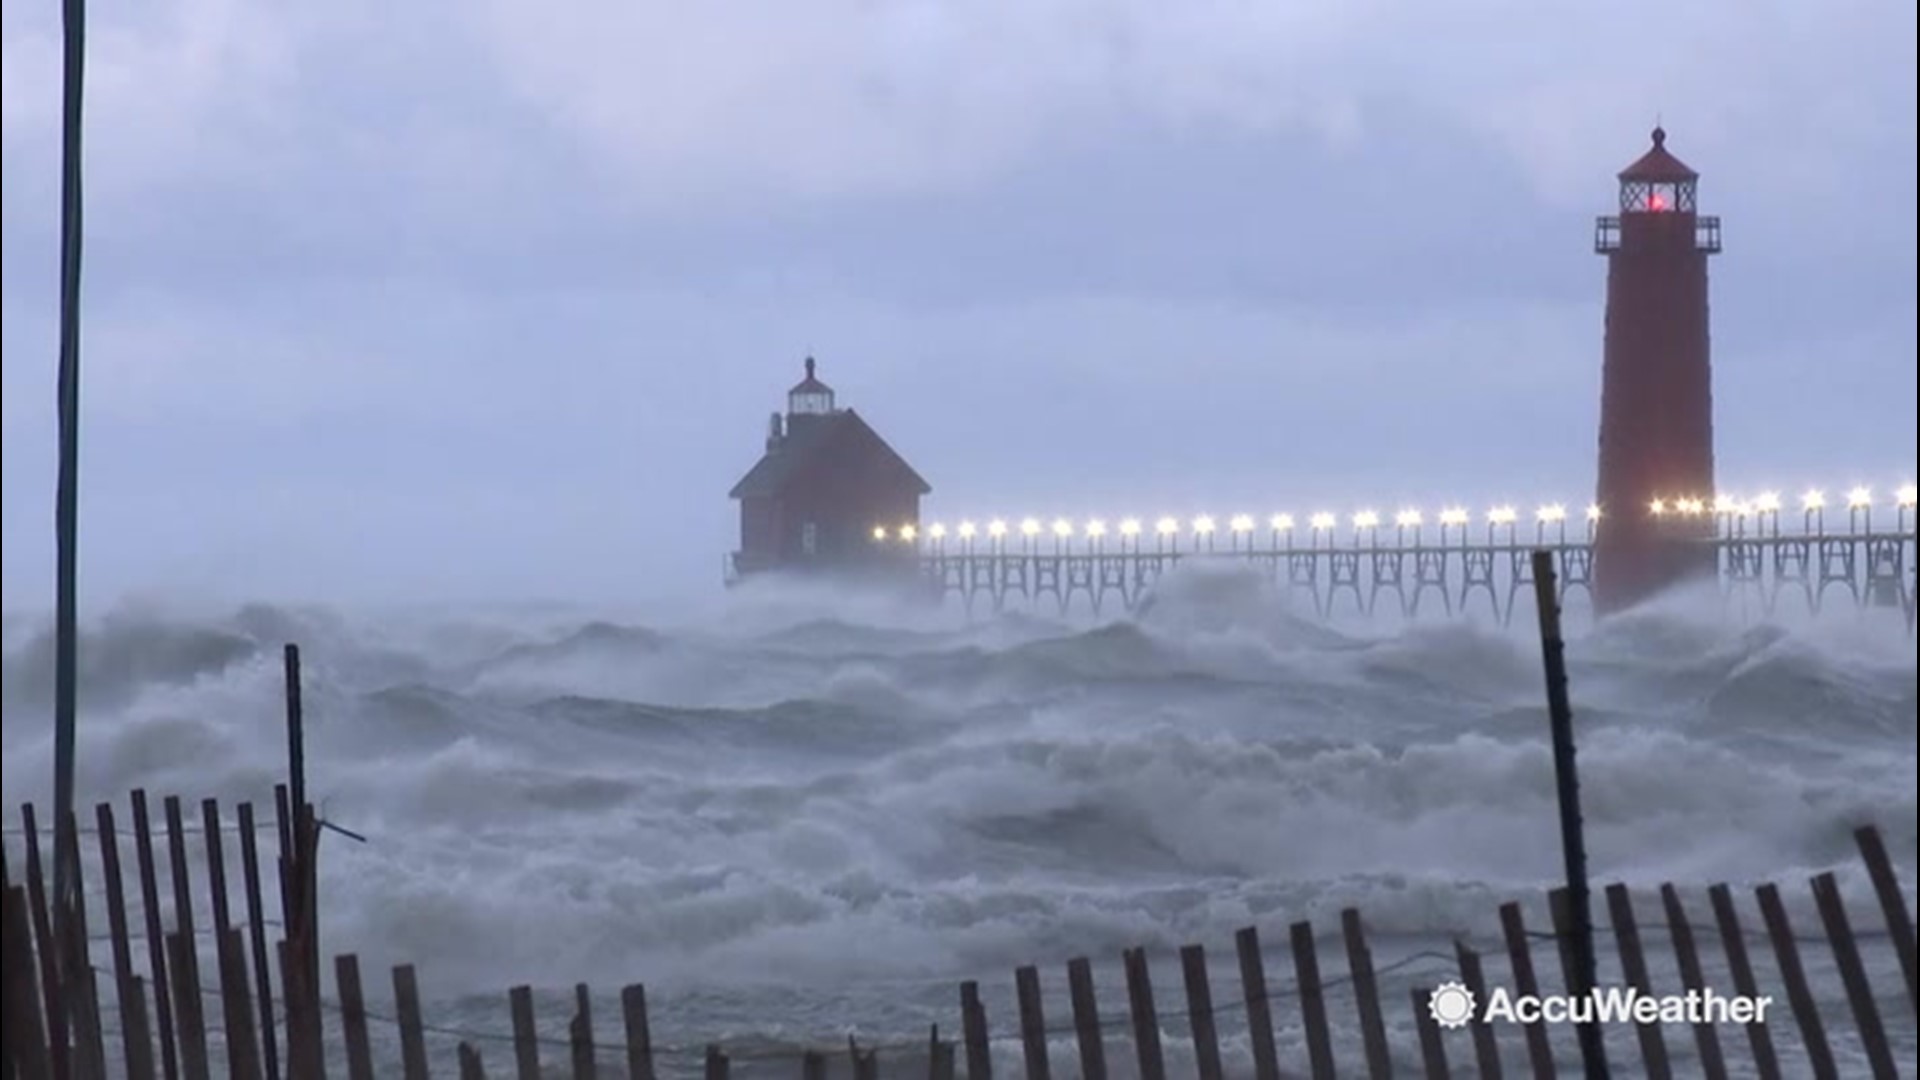 'Today, Lake Michigan is like an ocean'